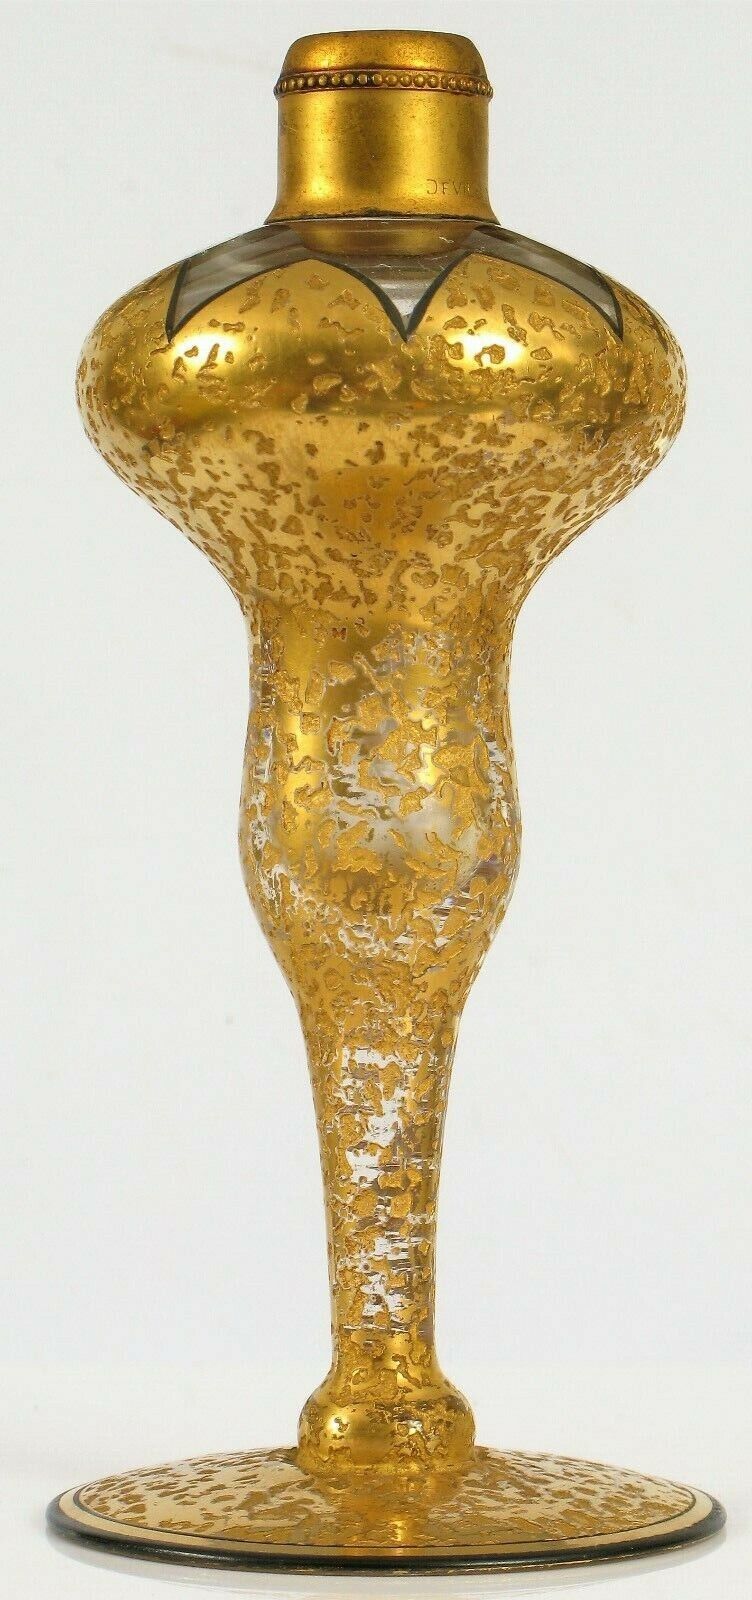 ANTIQUE BEAUTIFUL SIGNED DEVILBISS GOLD ART GLASS PERFUME BOTTLE VANITY PIECE 